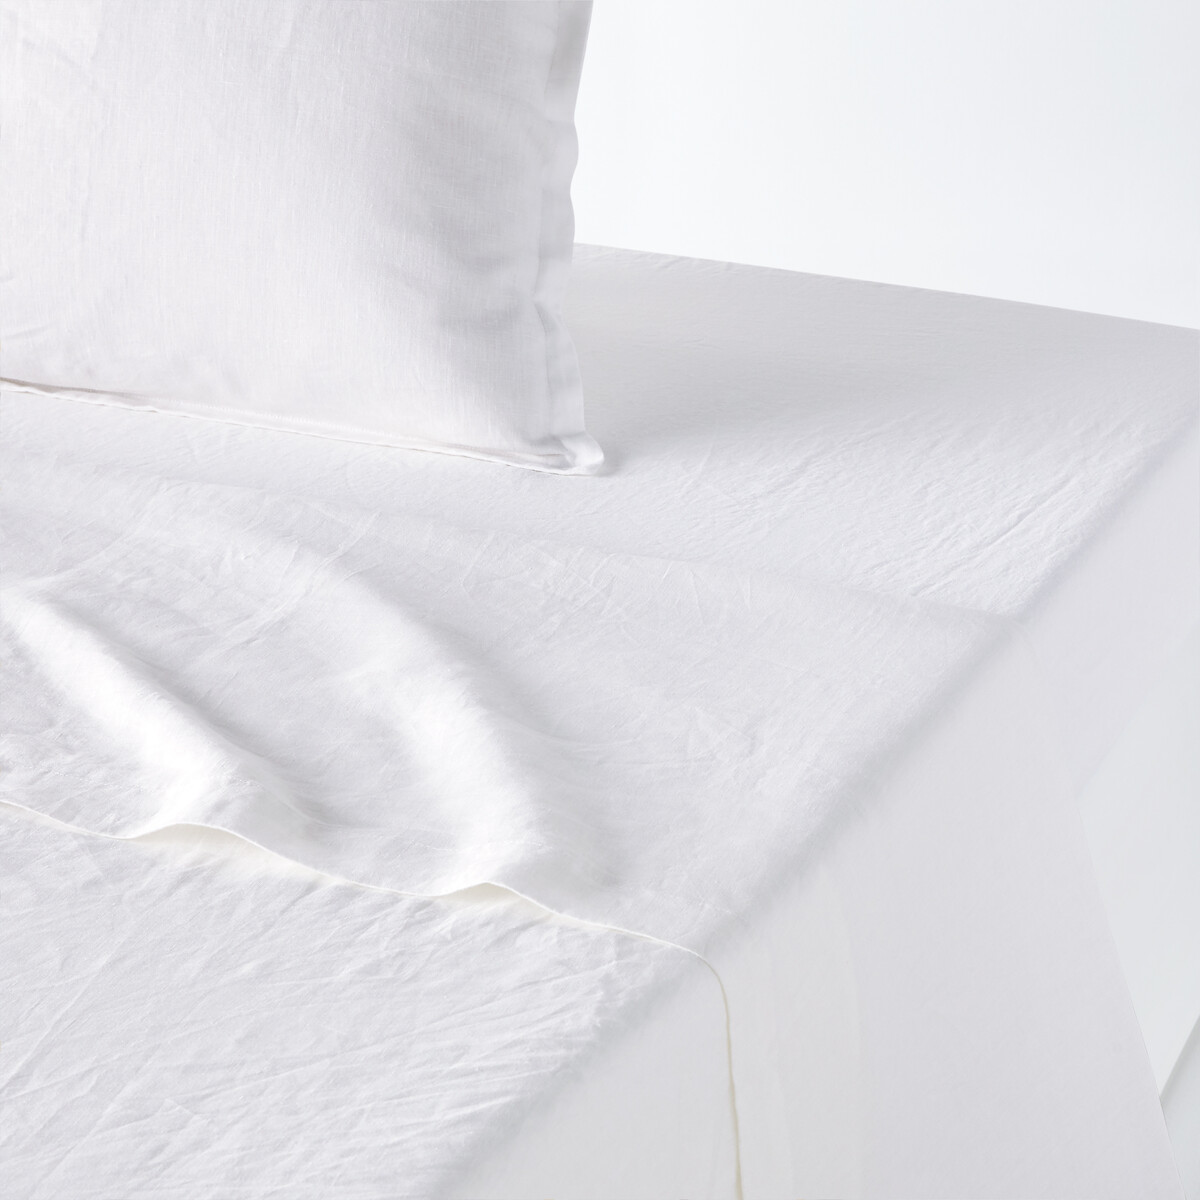 Linot Plain 100% Washed Linen Flat Sheet